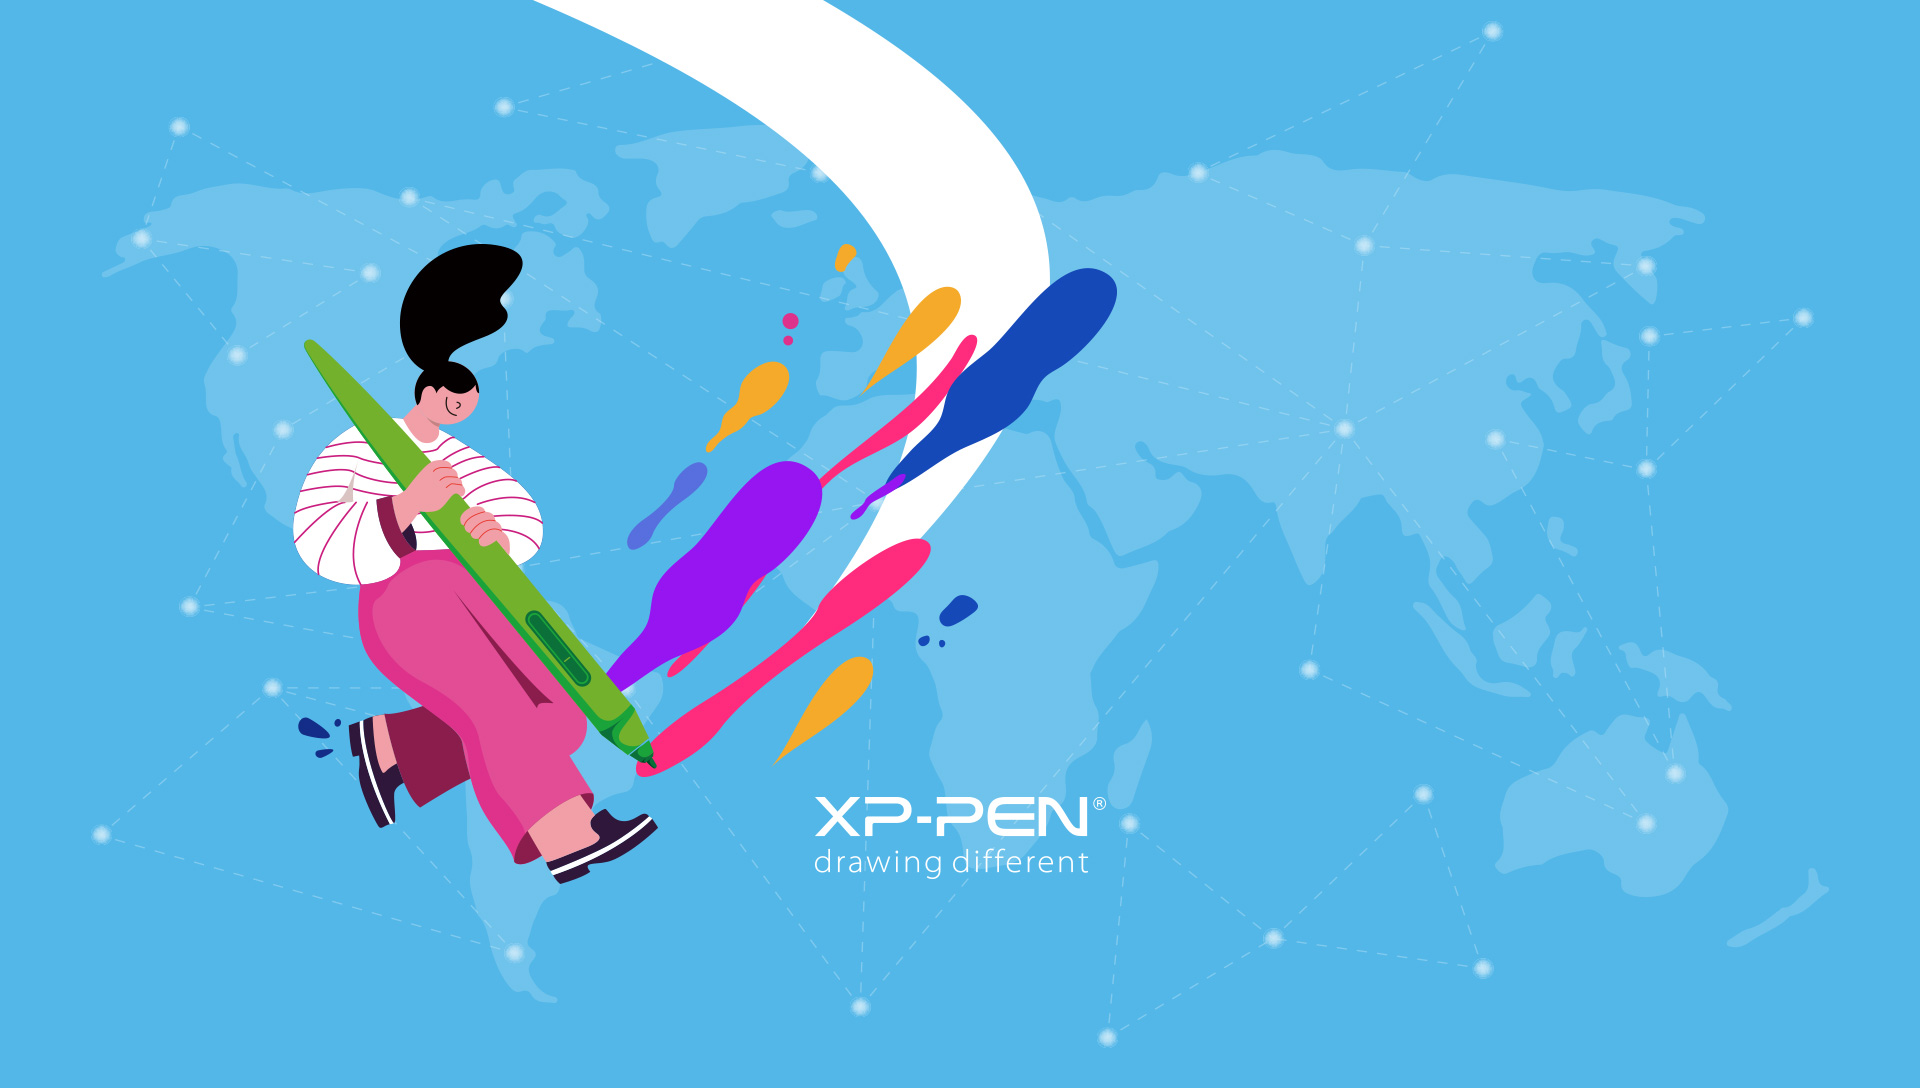 Happy 15th Anniversary to XP-PEN